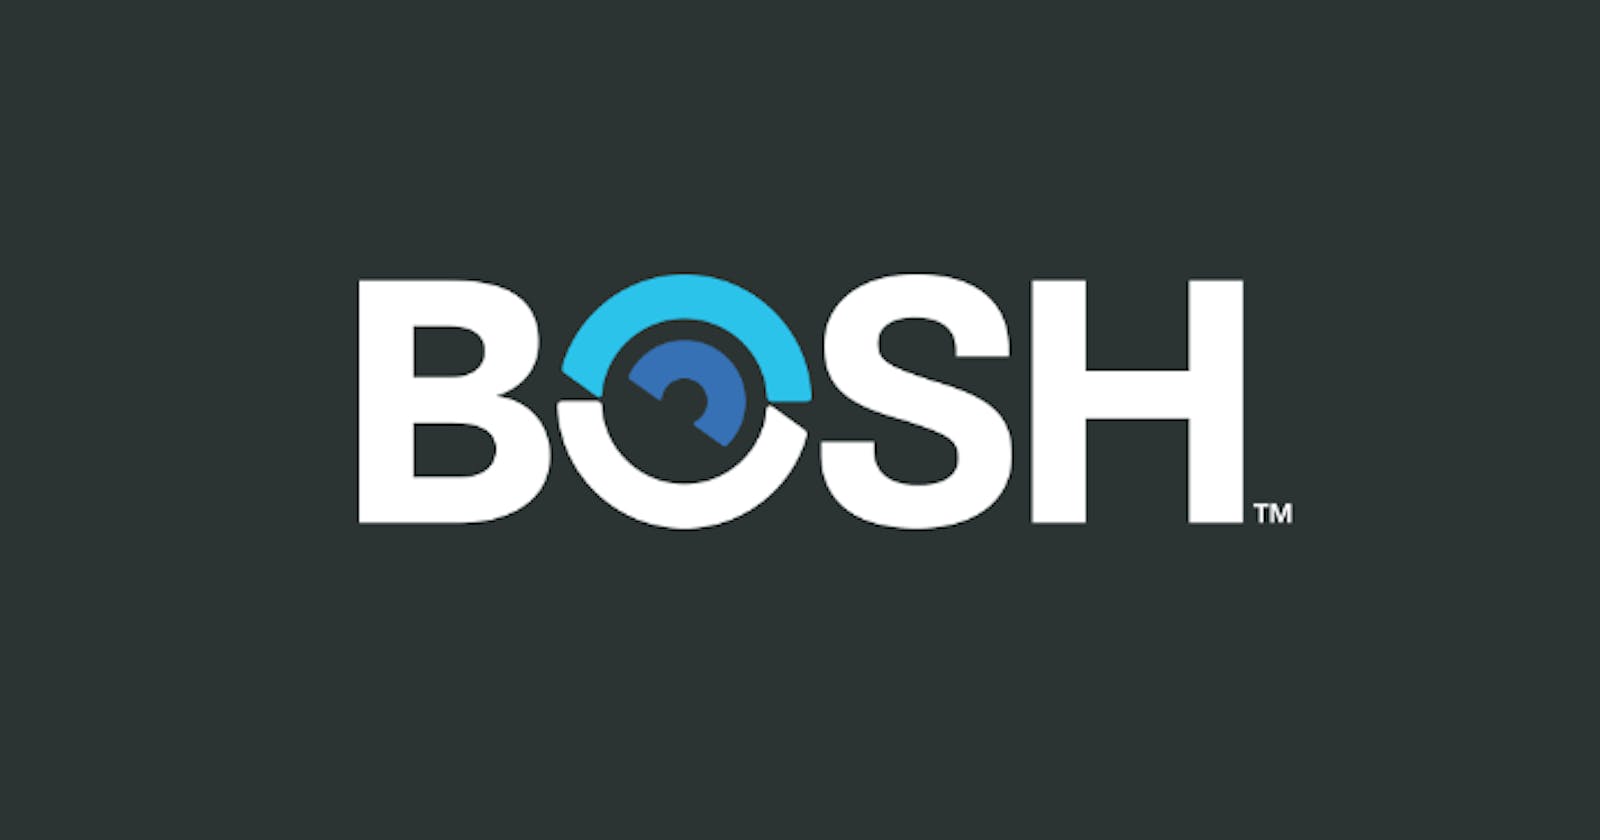 The value of BOSH